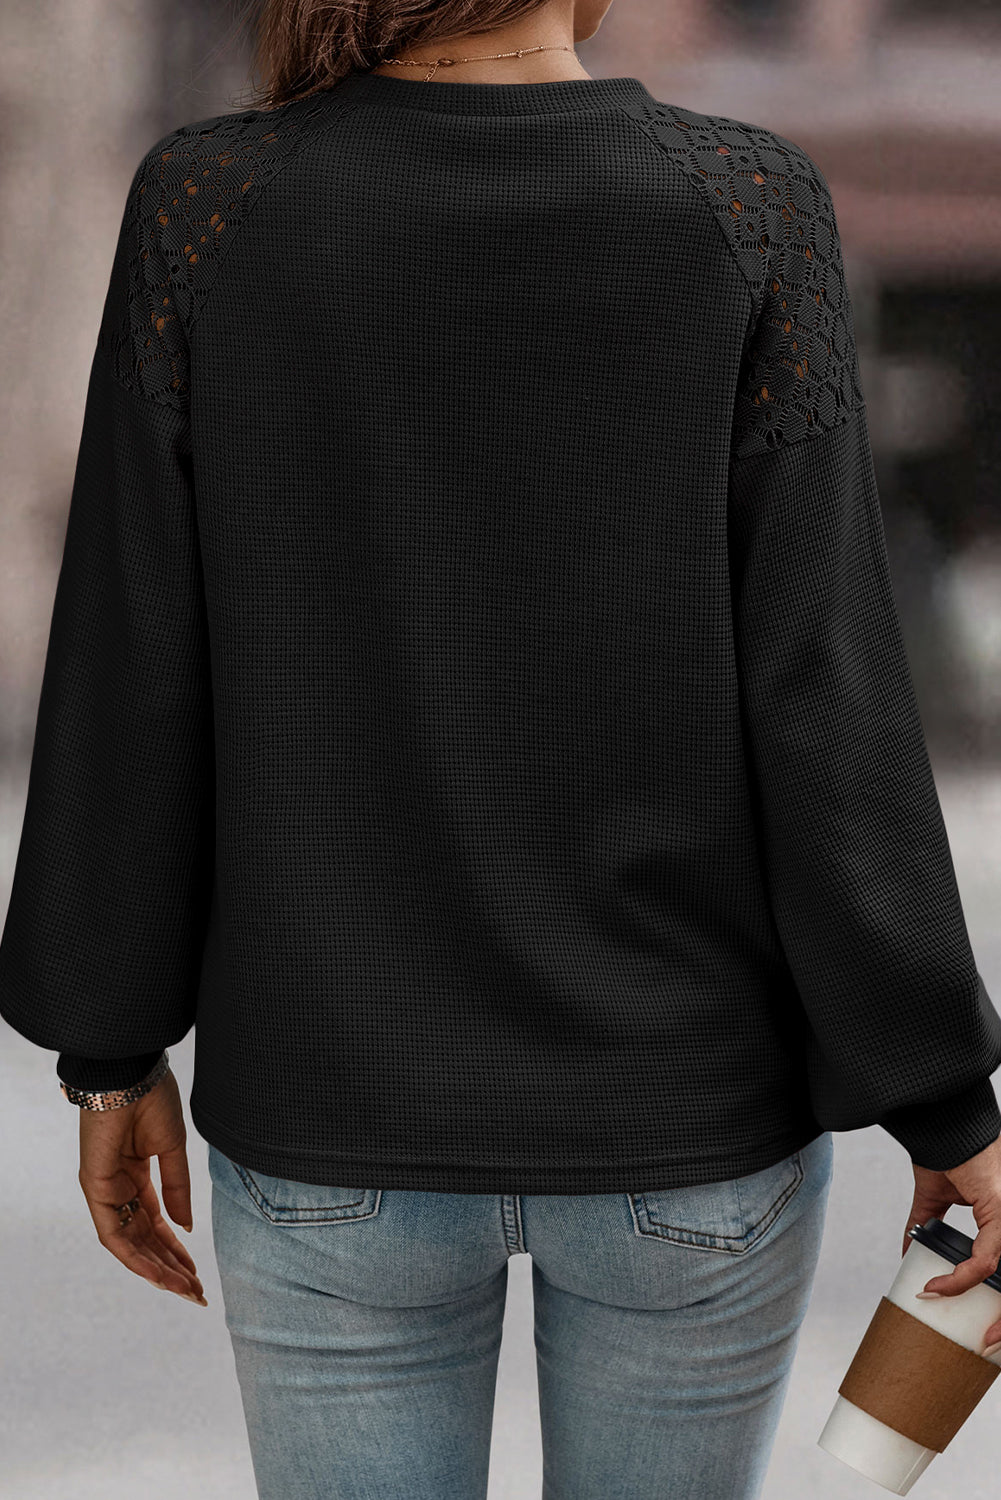 Črn čipkast teksturiran pulover z dolgimi rokavi